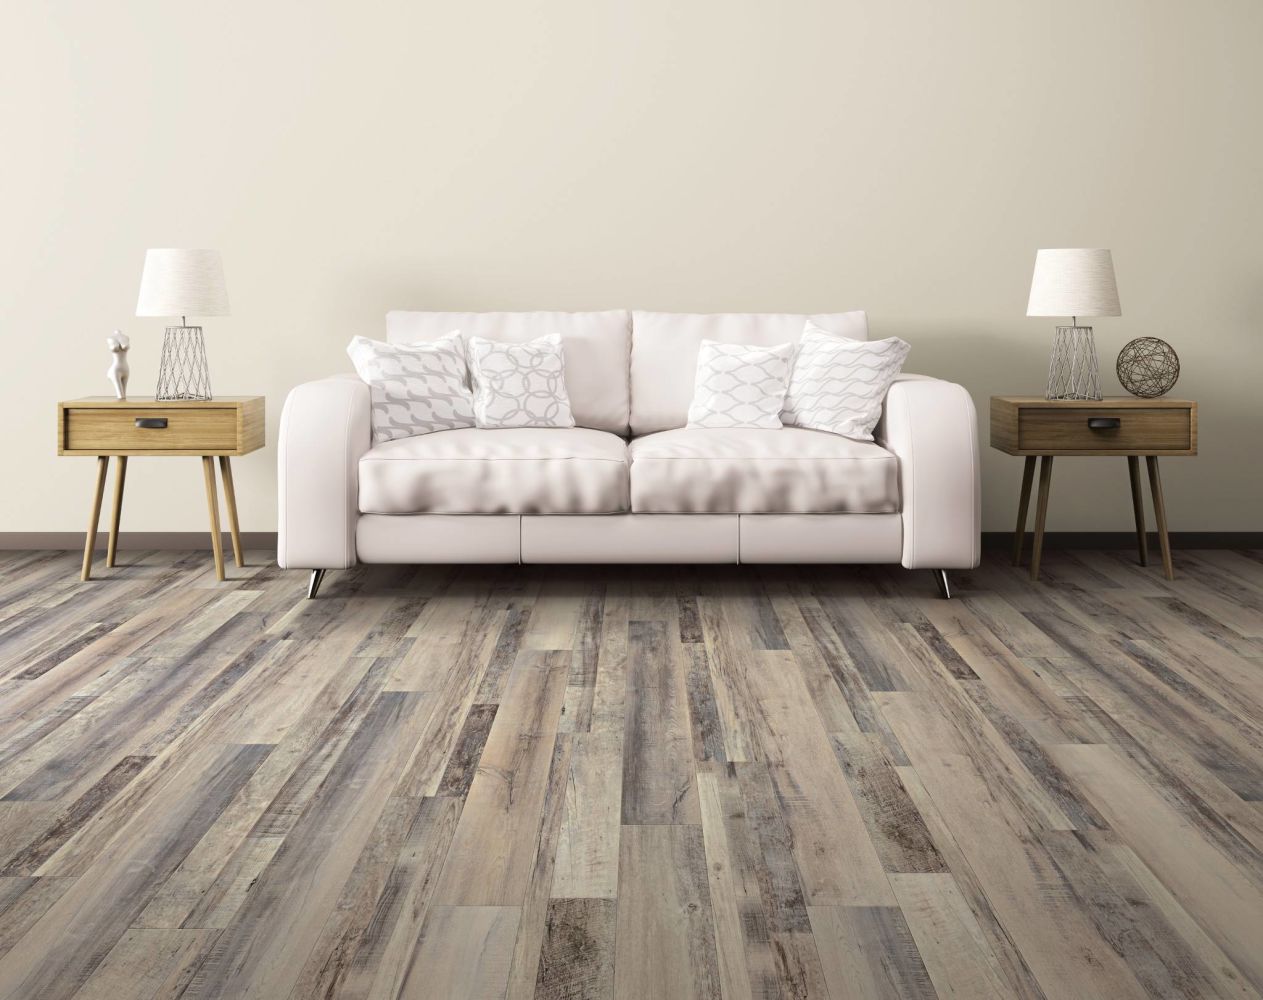 Shaw Floors Carpets Plus COREtec Choice 7″ Axial Oak 00753_CV236